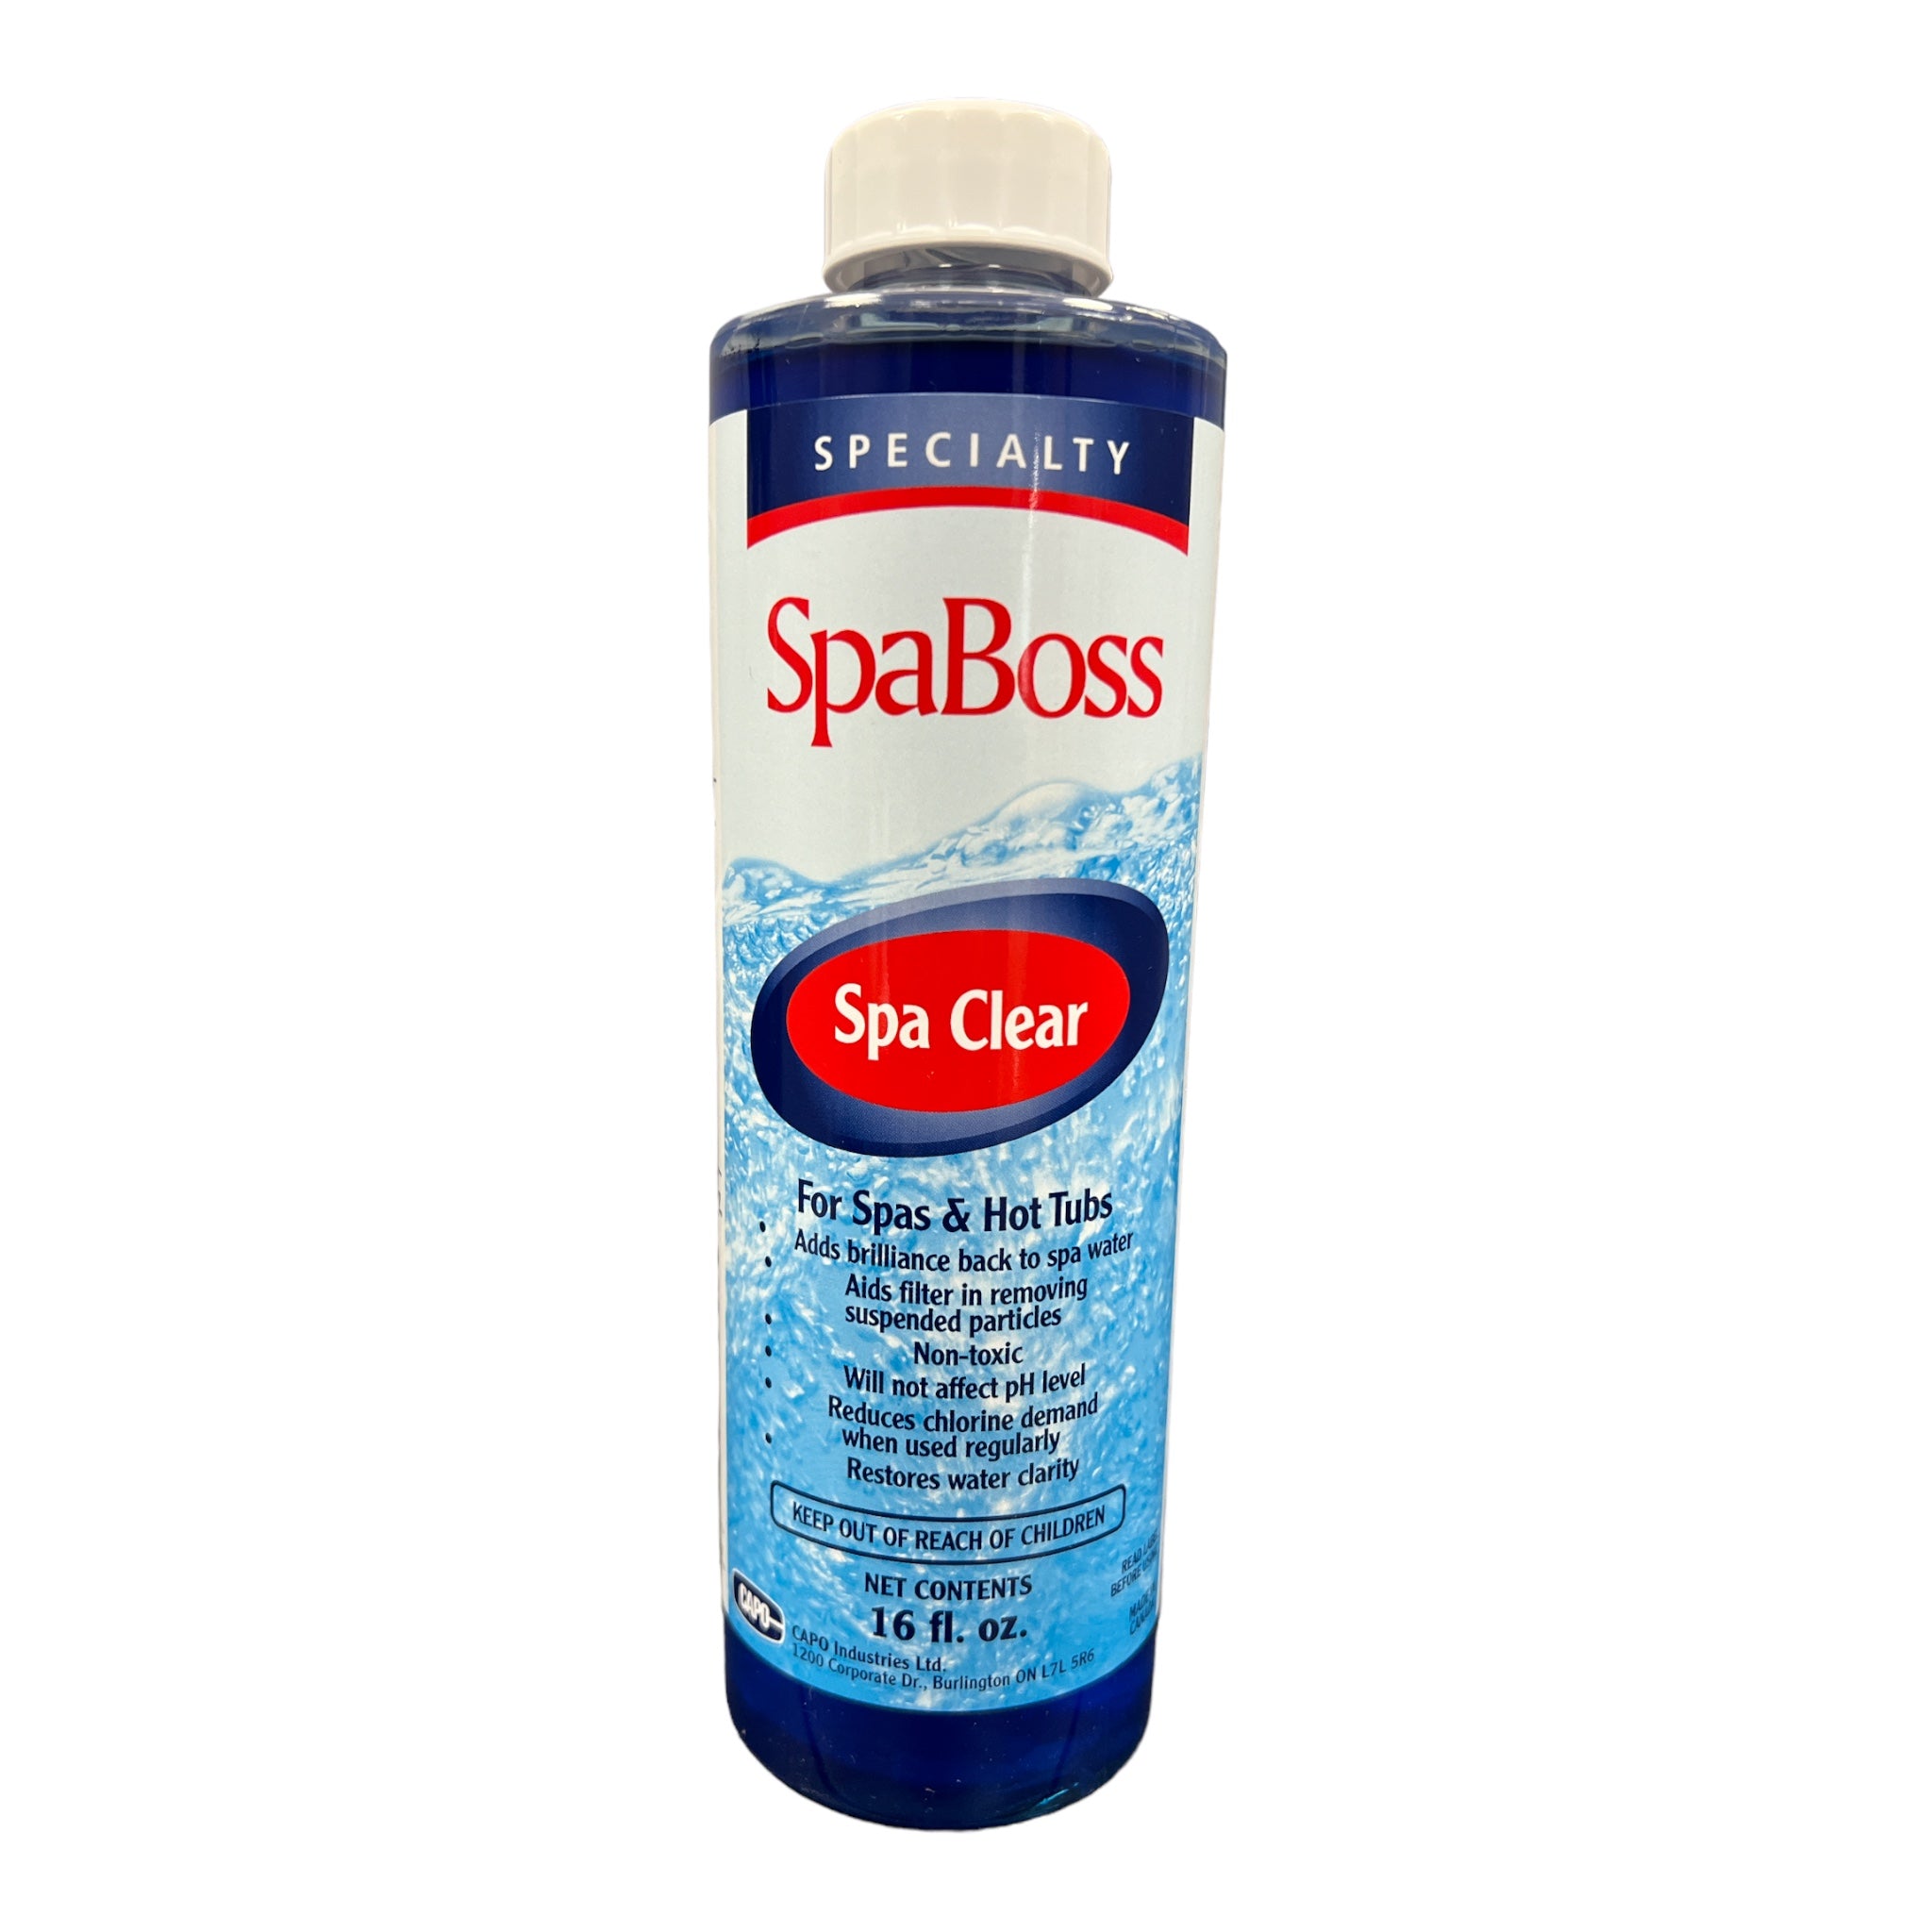 SpaBoss Spa Clear